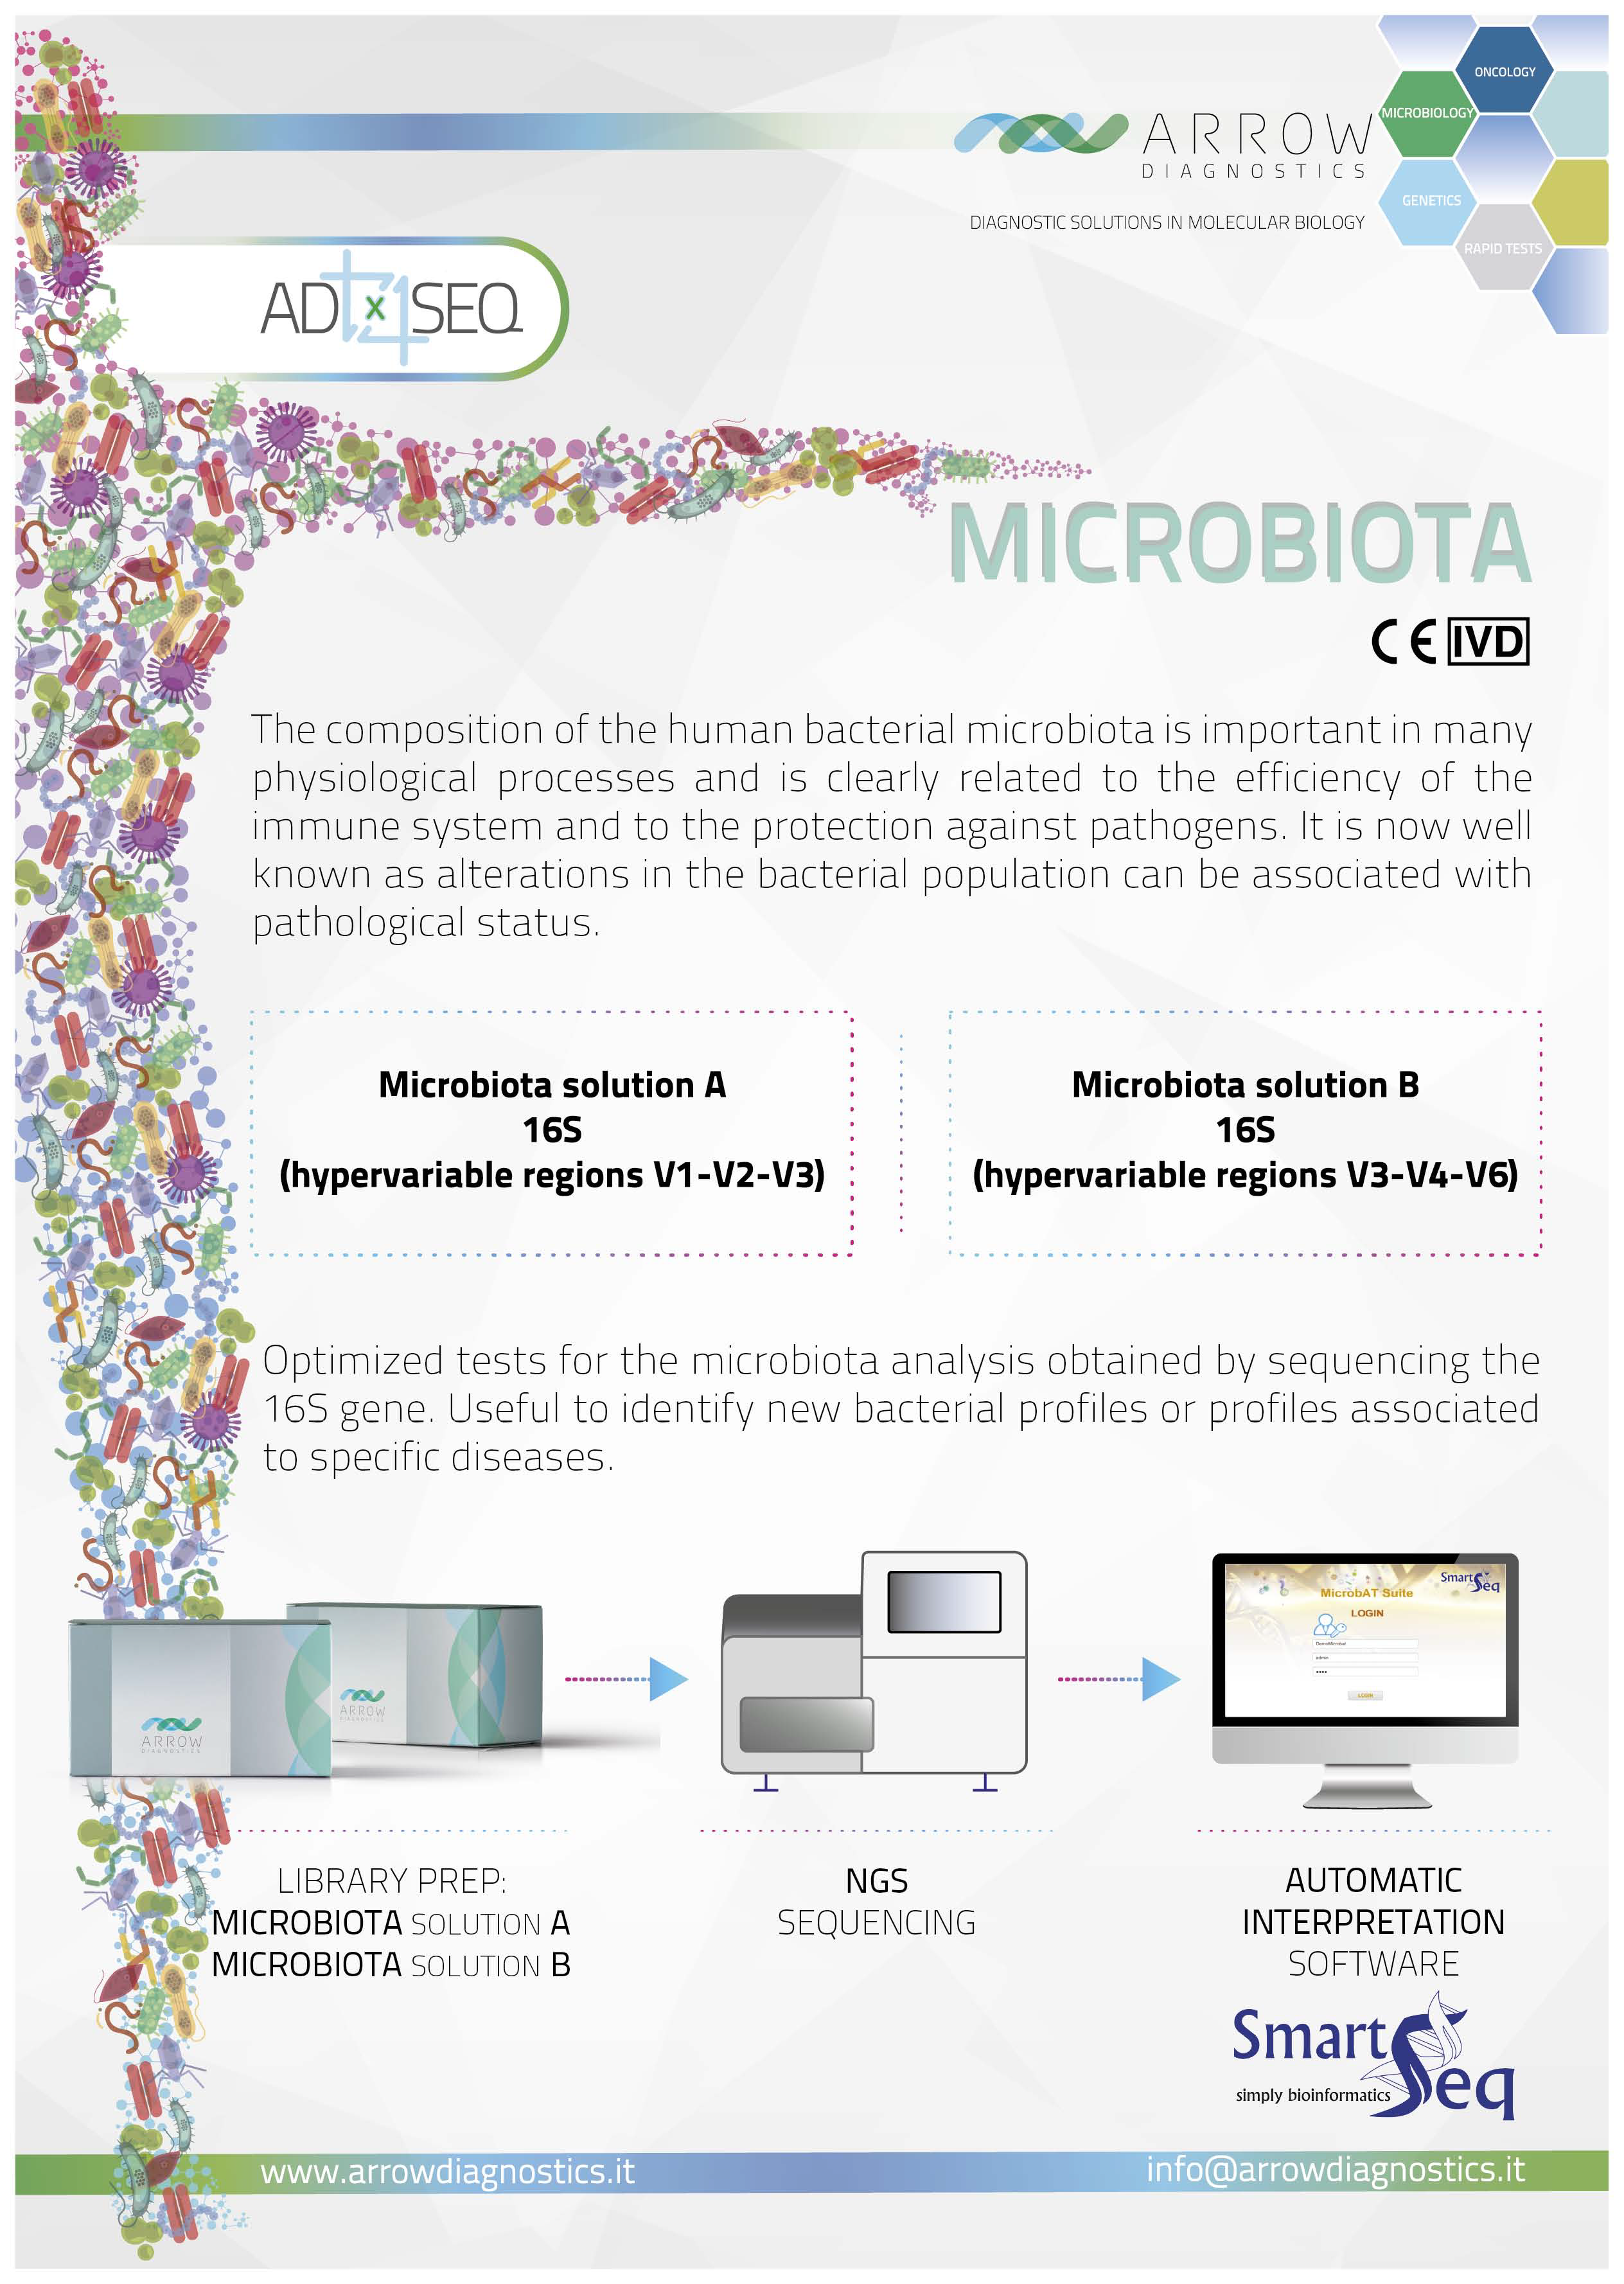 Microbiota solution A / Microbiota solution B
